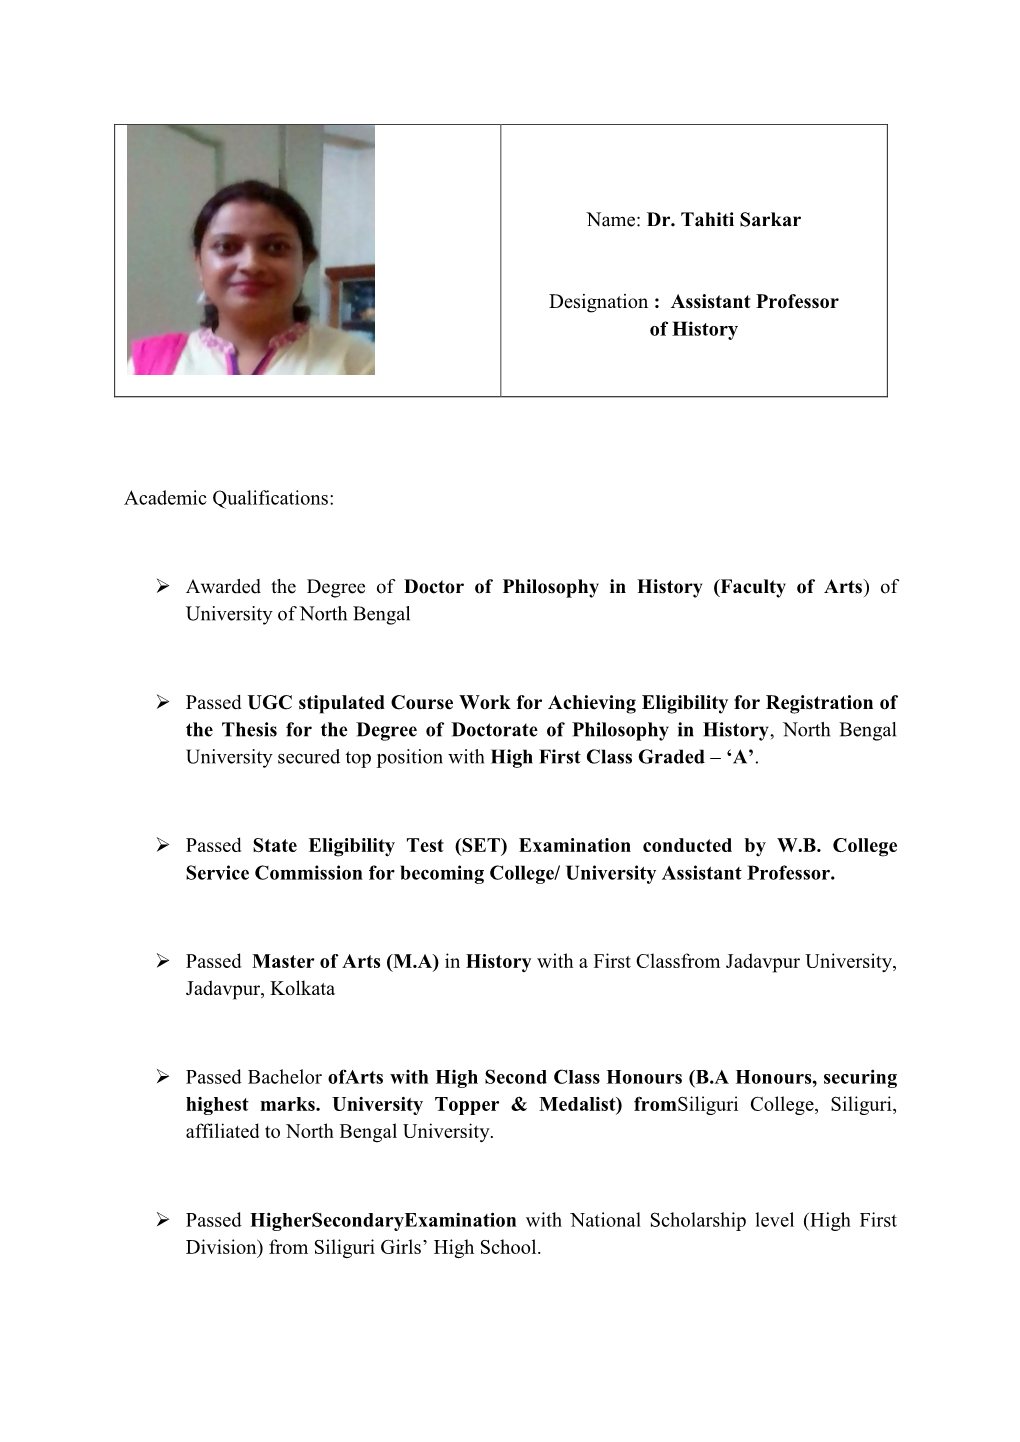 Name: Dr. Tahiti Sarkar Designation : Assistant Professor of History